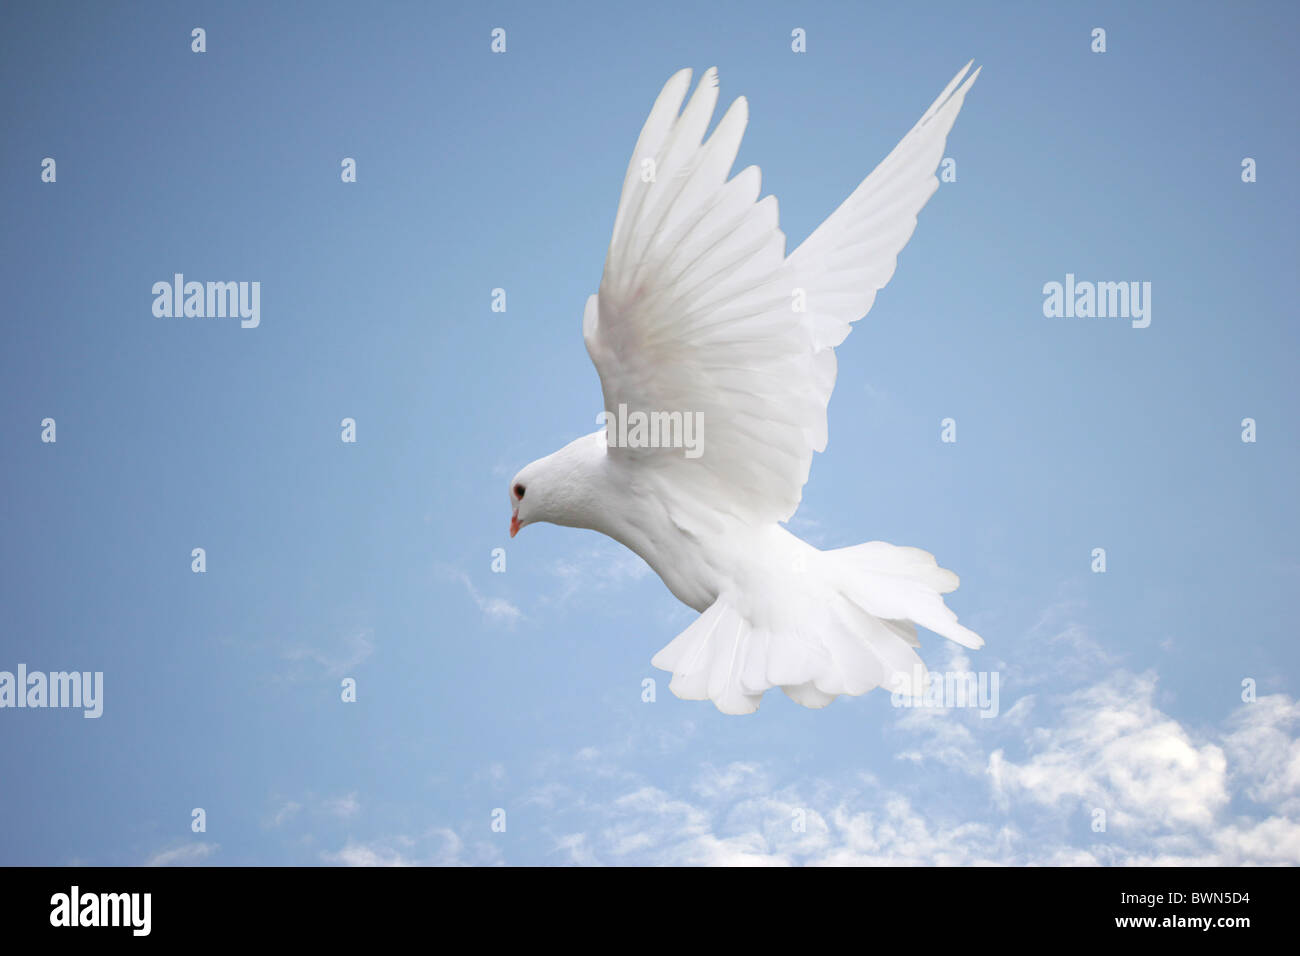 Beautiful white dove in flight, blue sky background Stock Photo